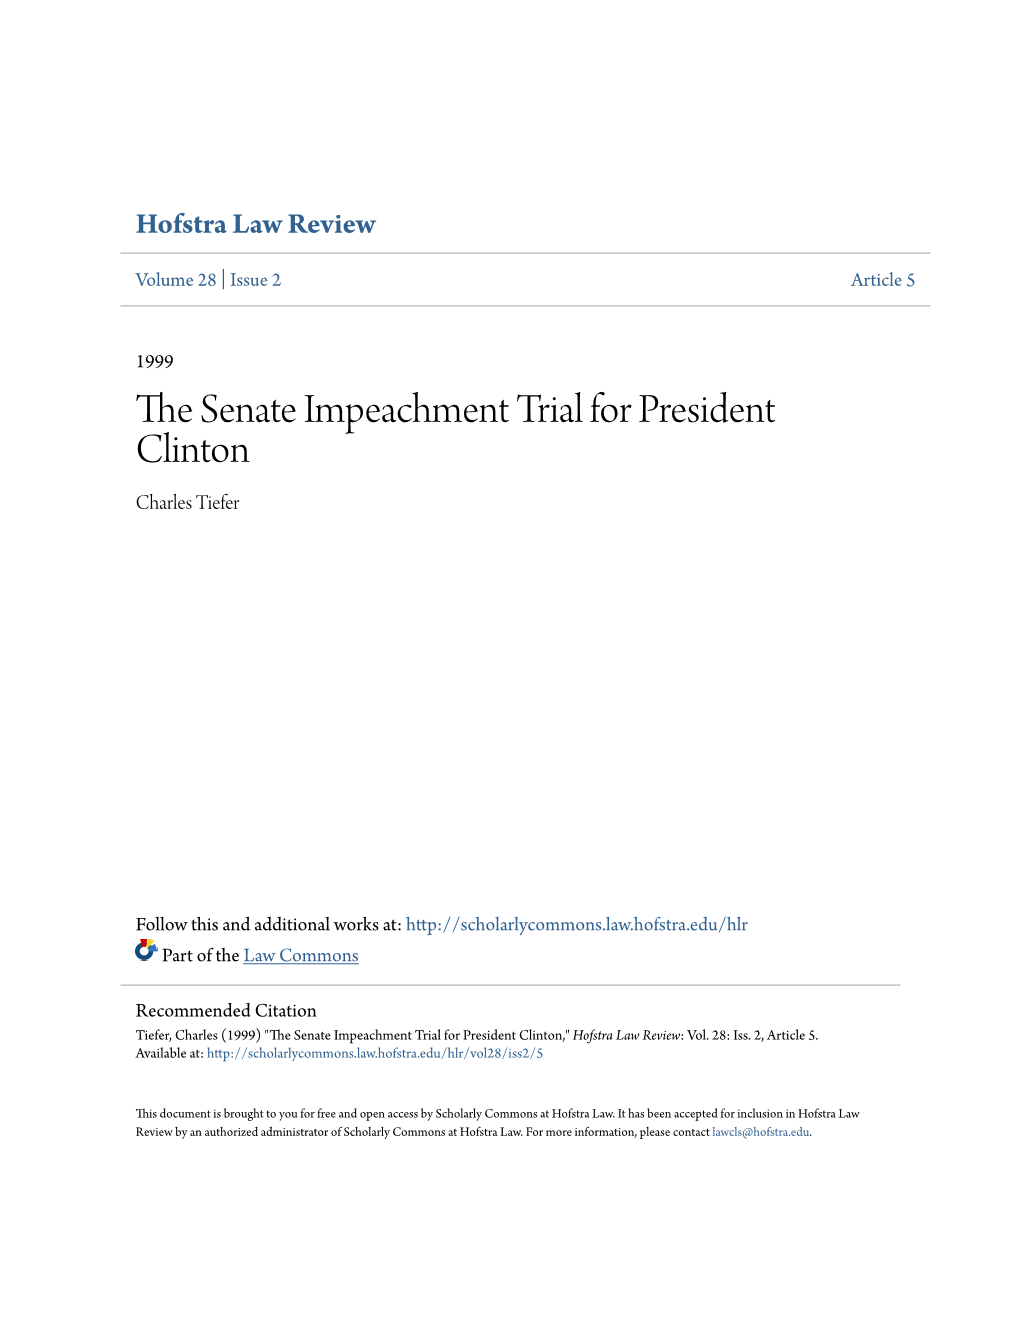 The Senate Impeachment Trial for President Clinton